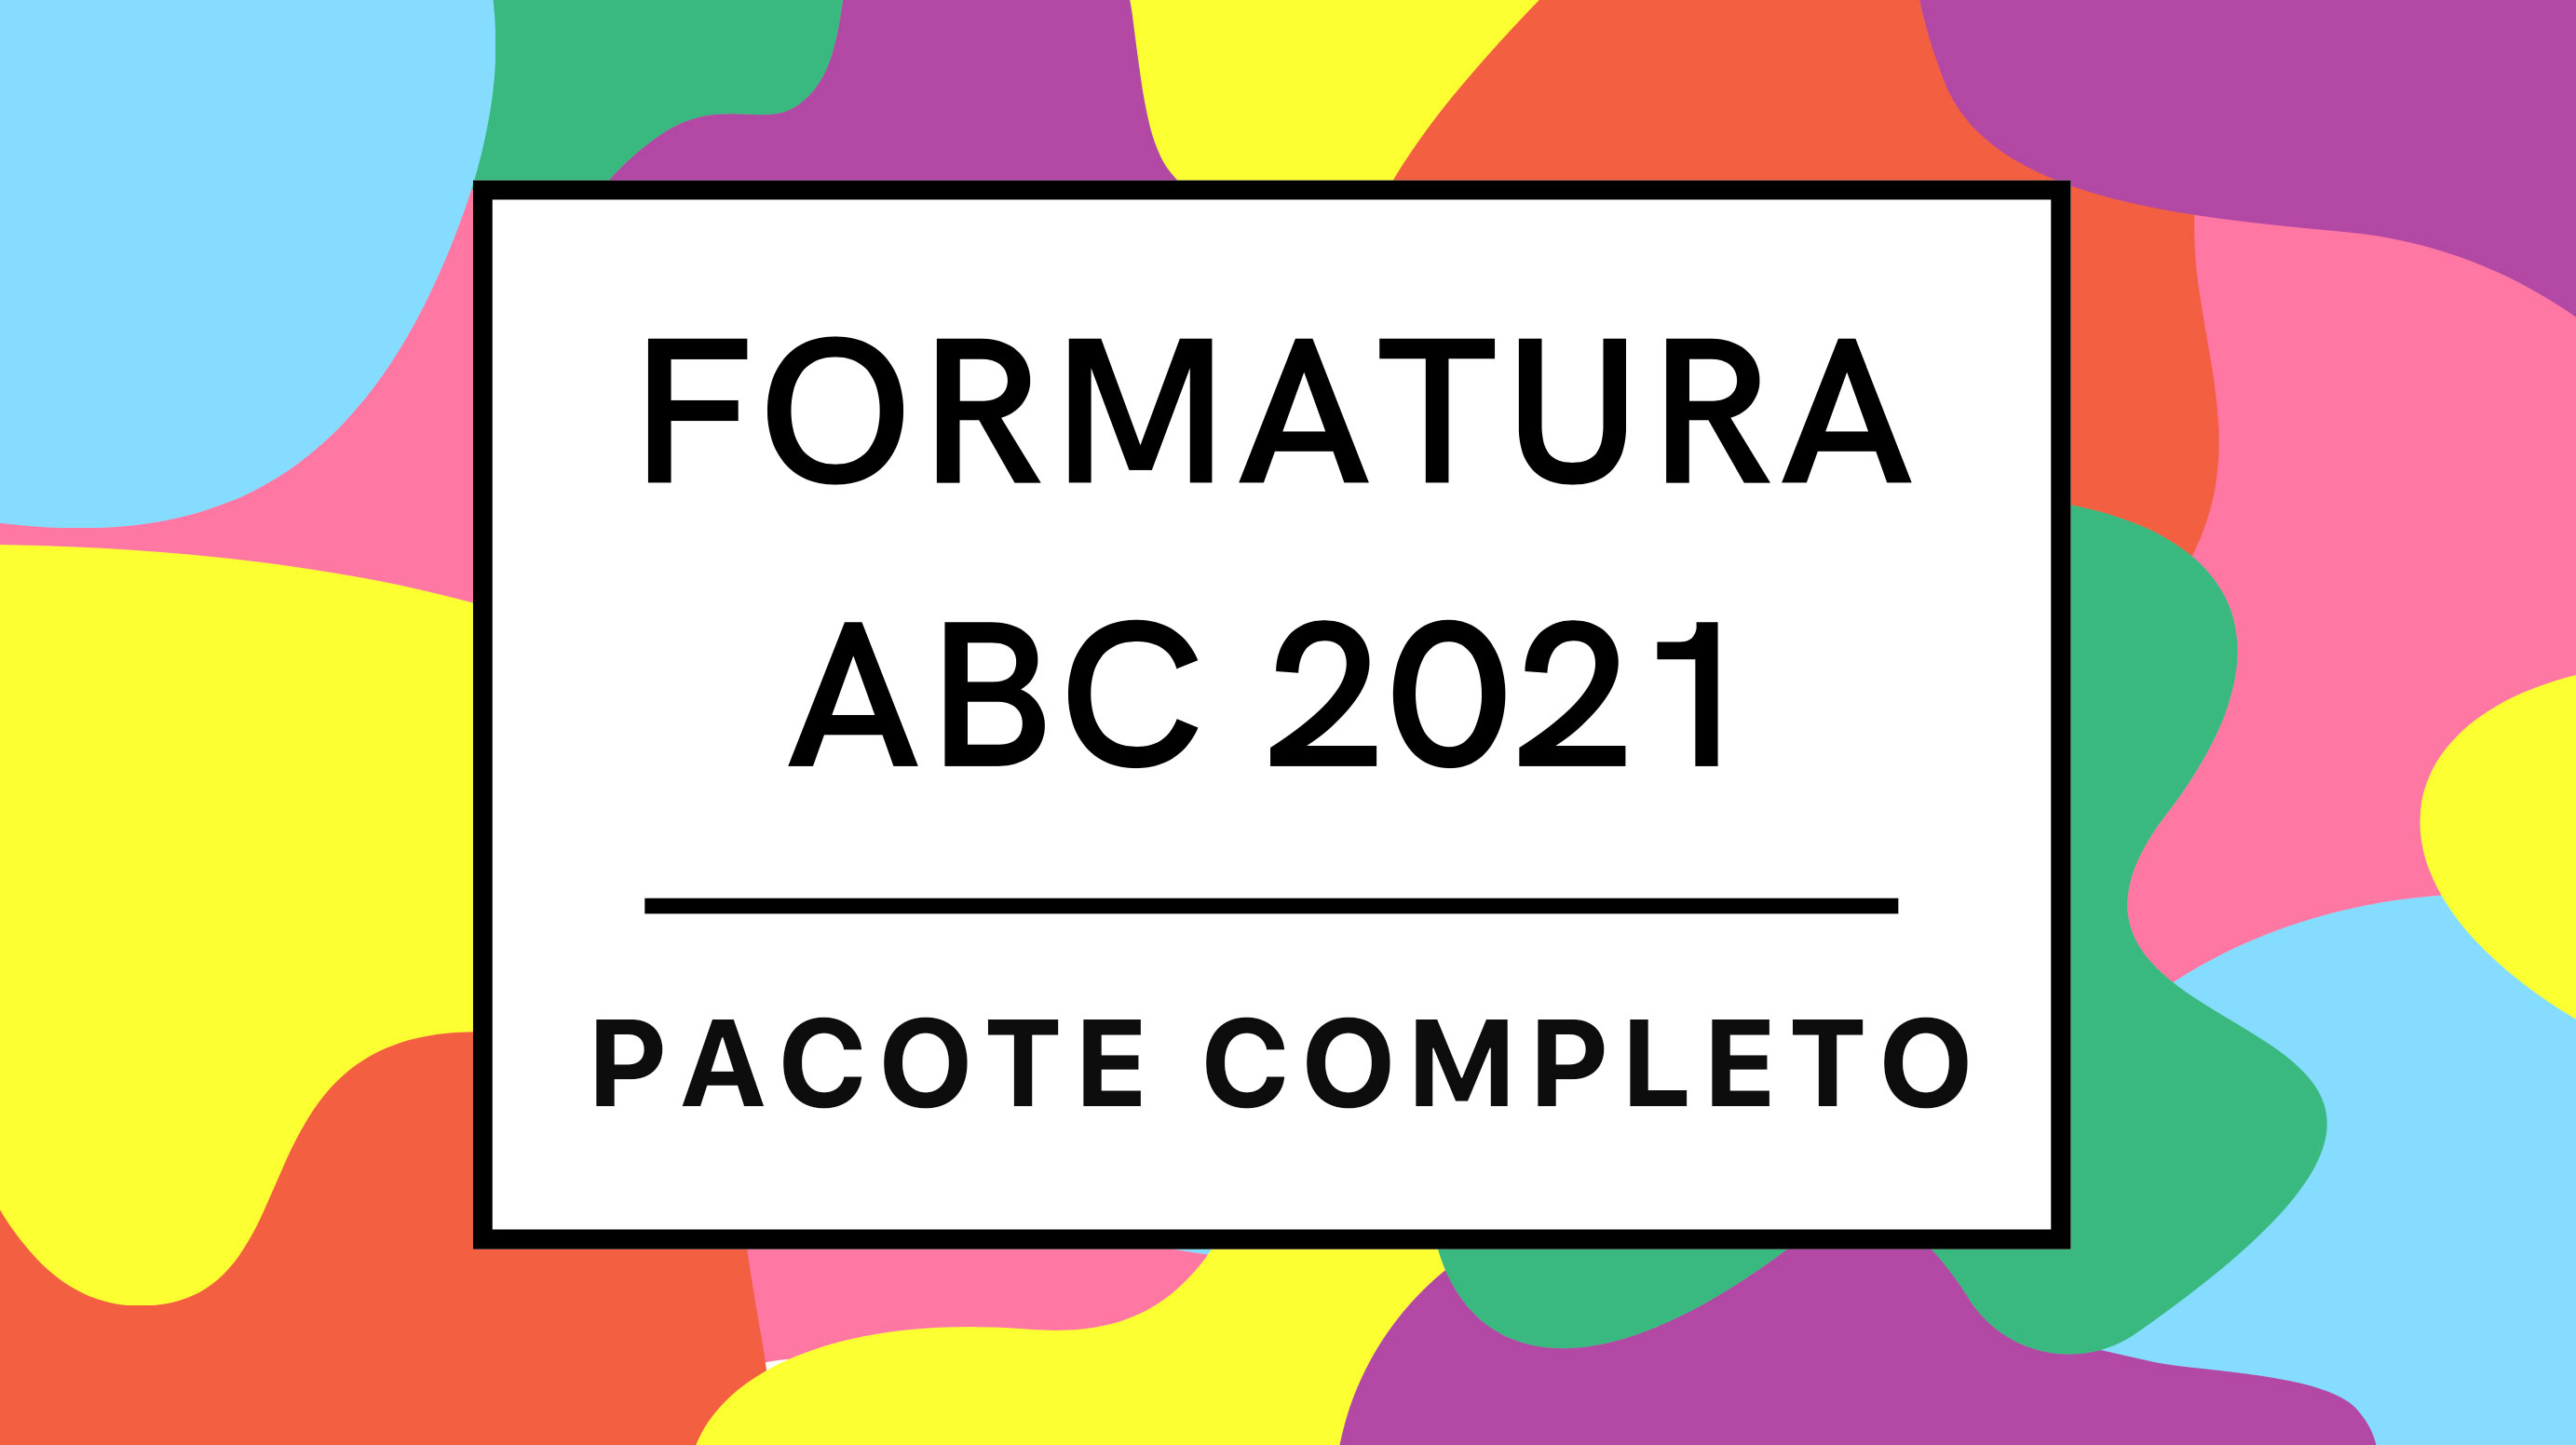 FORMATURA ABC 2021 - Pacote Completo